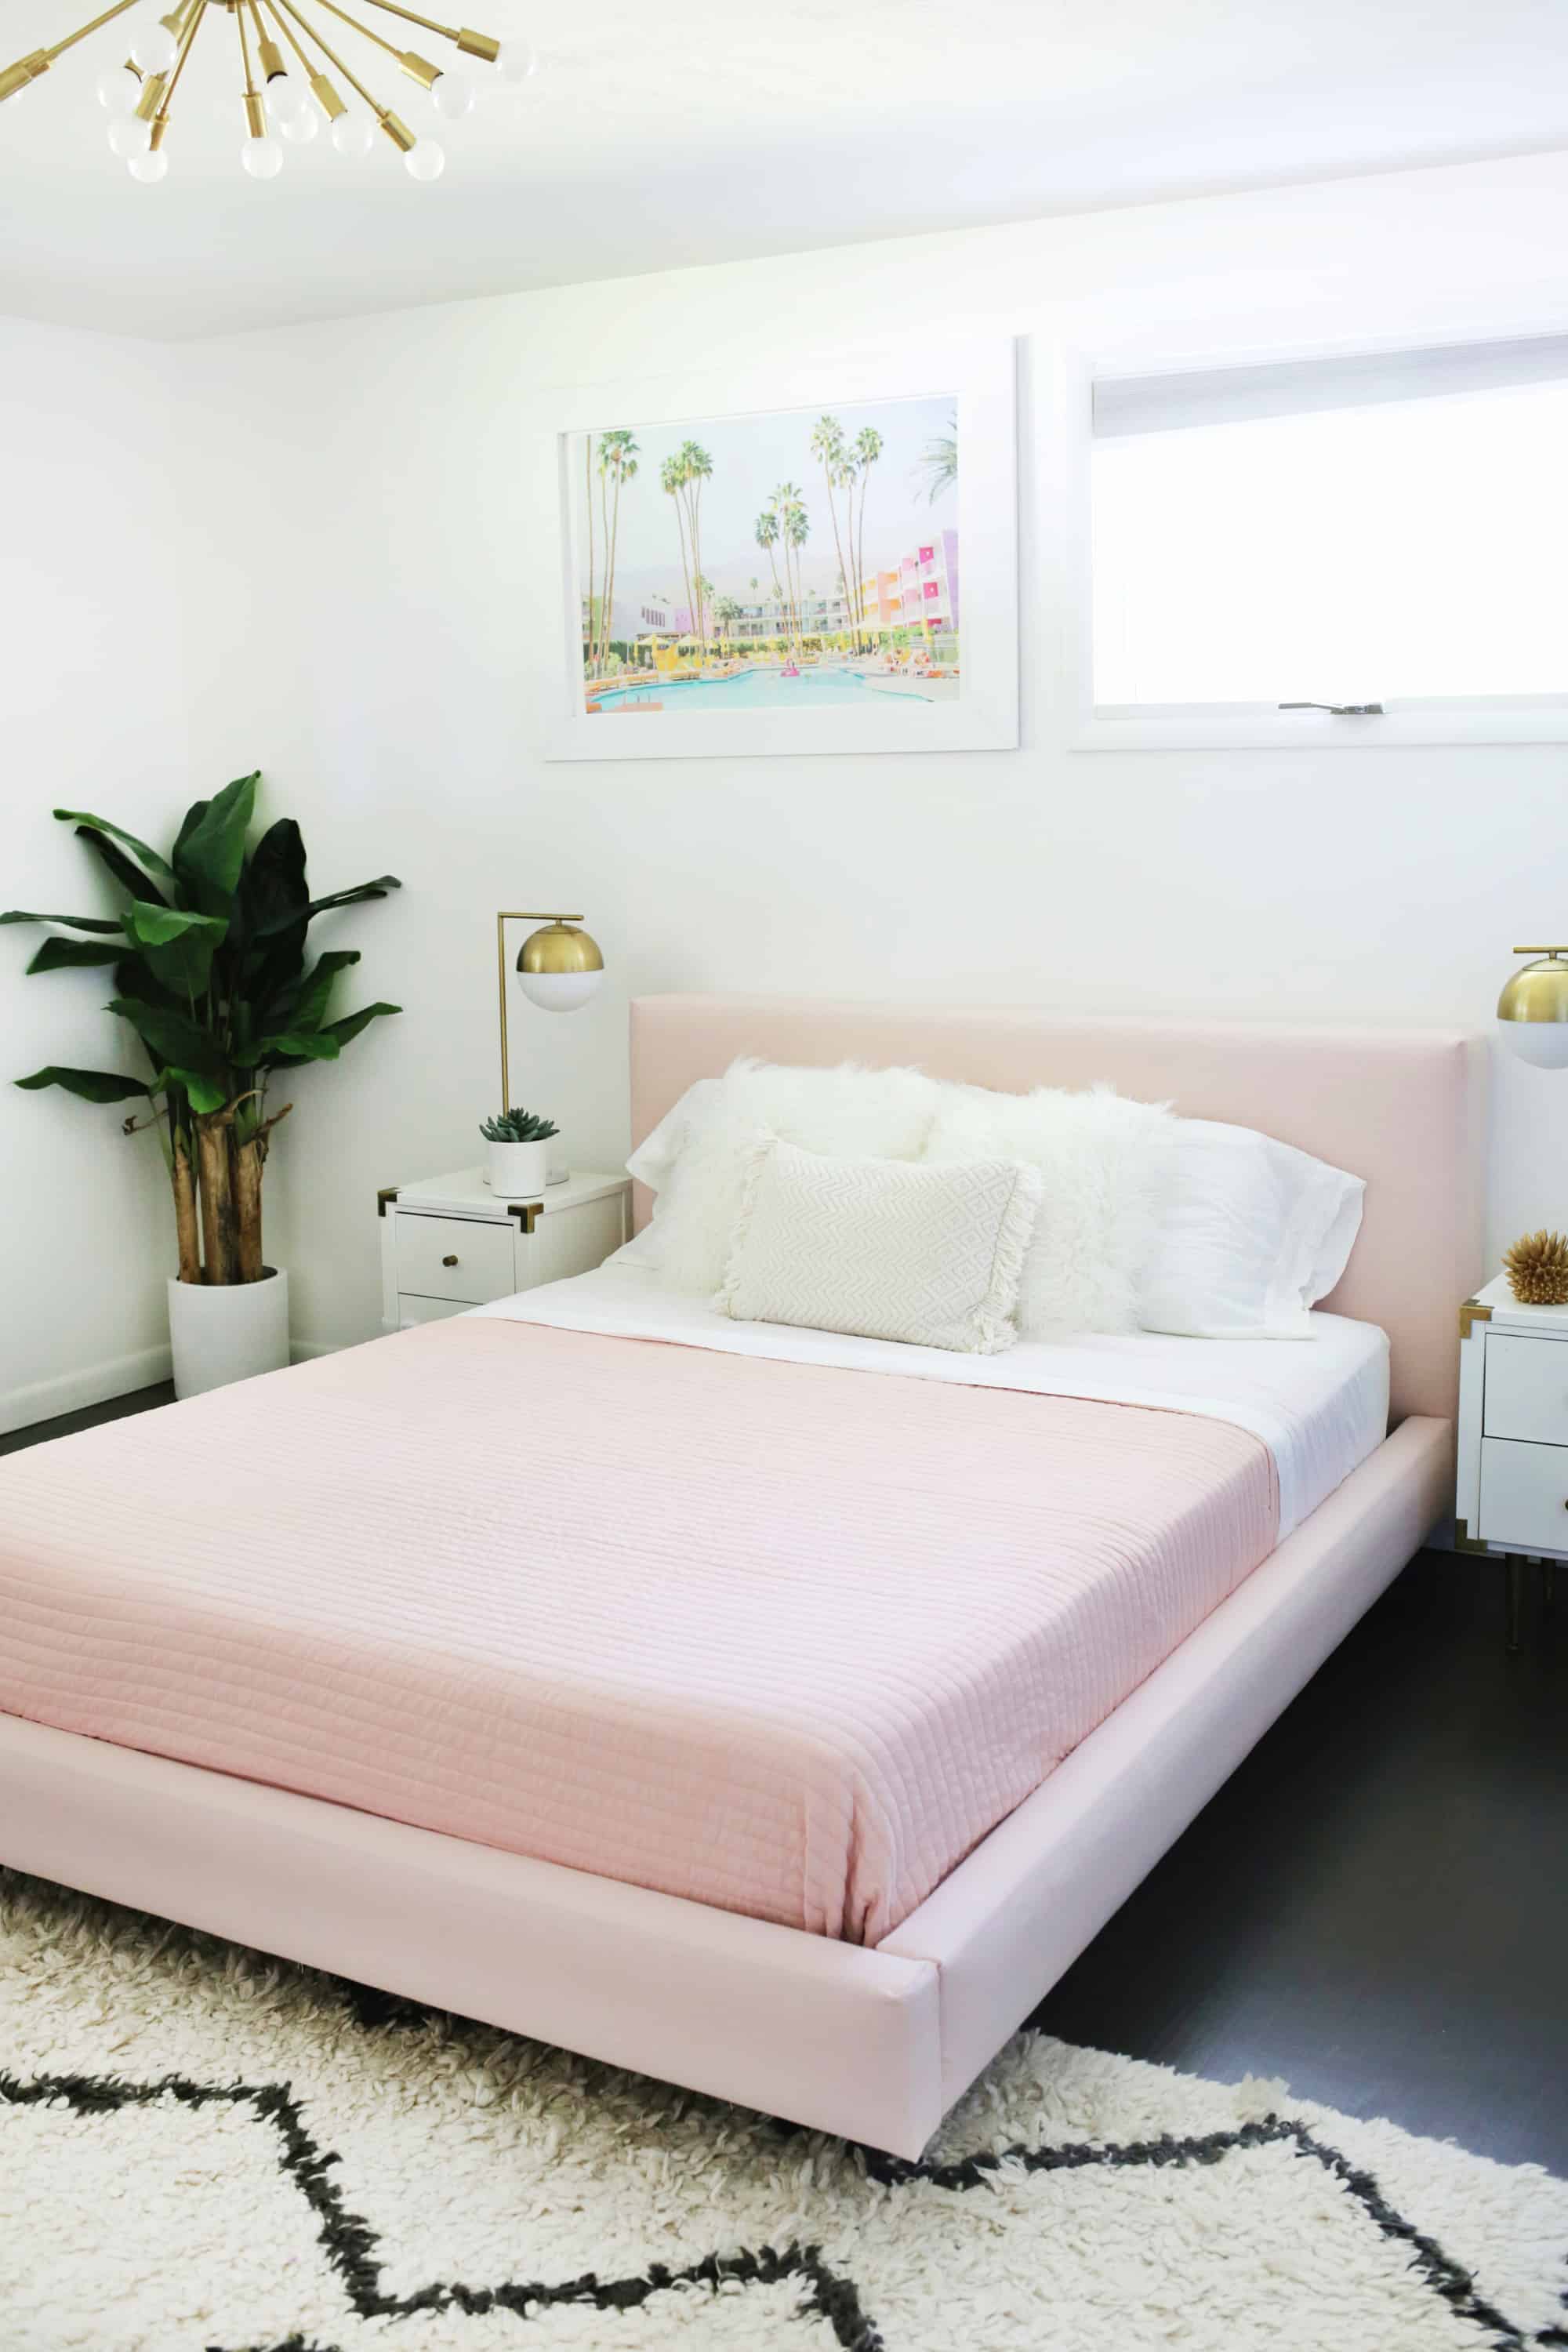 Reupholster Your Bed Frame In One, Most Popular Bed Frames 2018